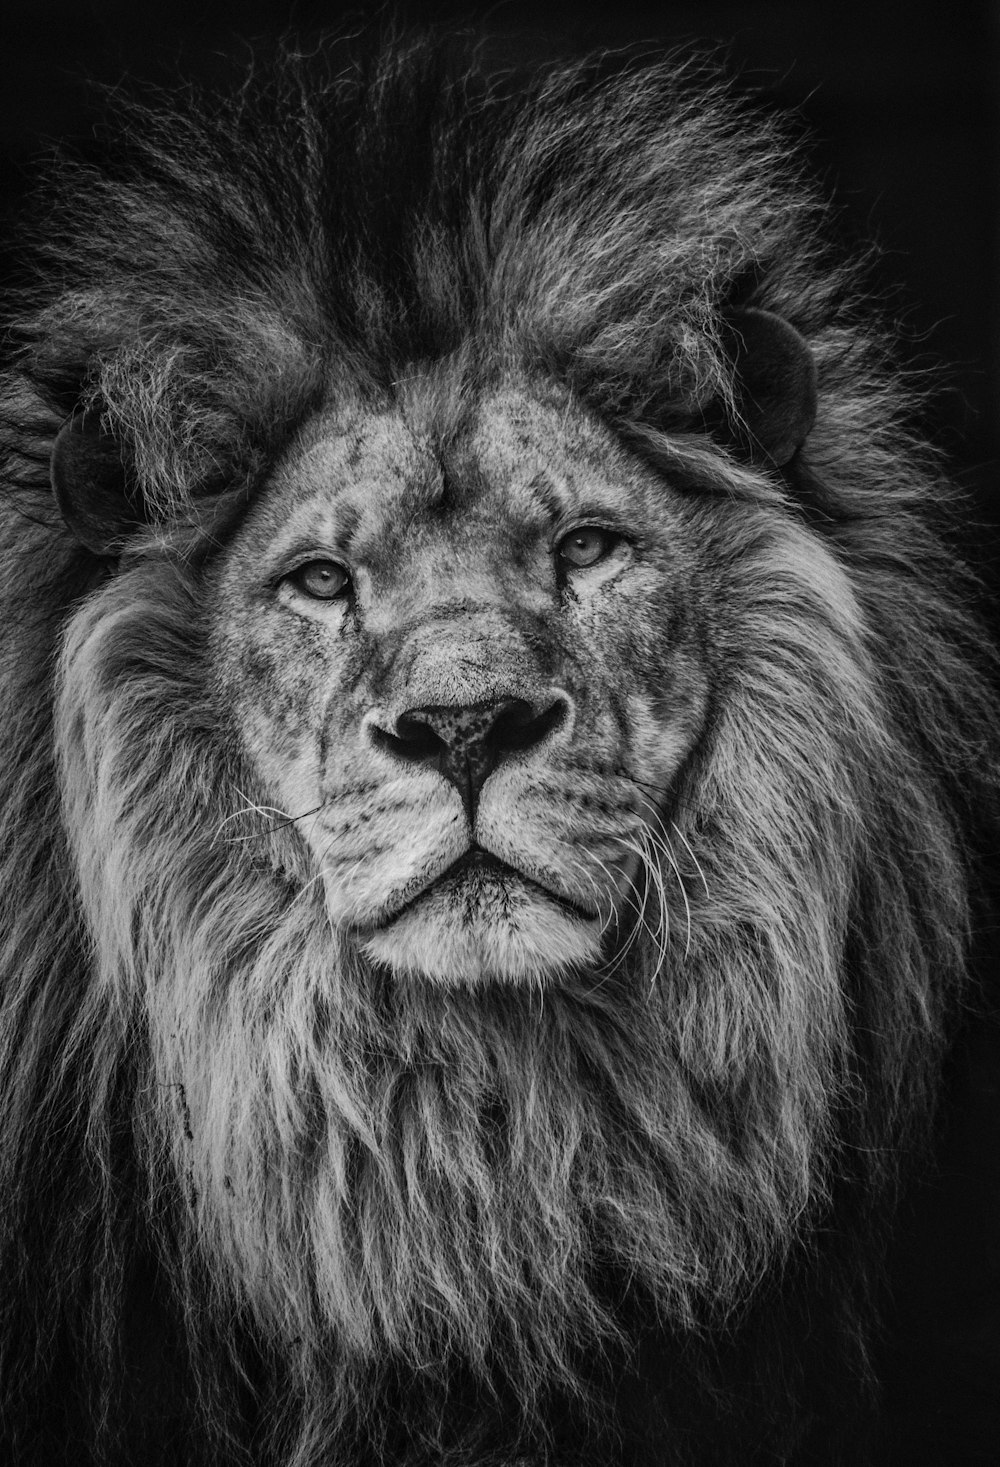 Fotografía en escala de grises de león